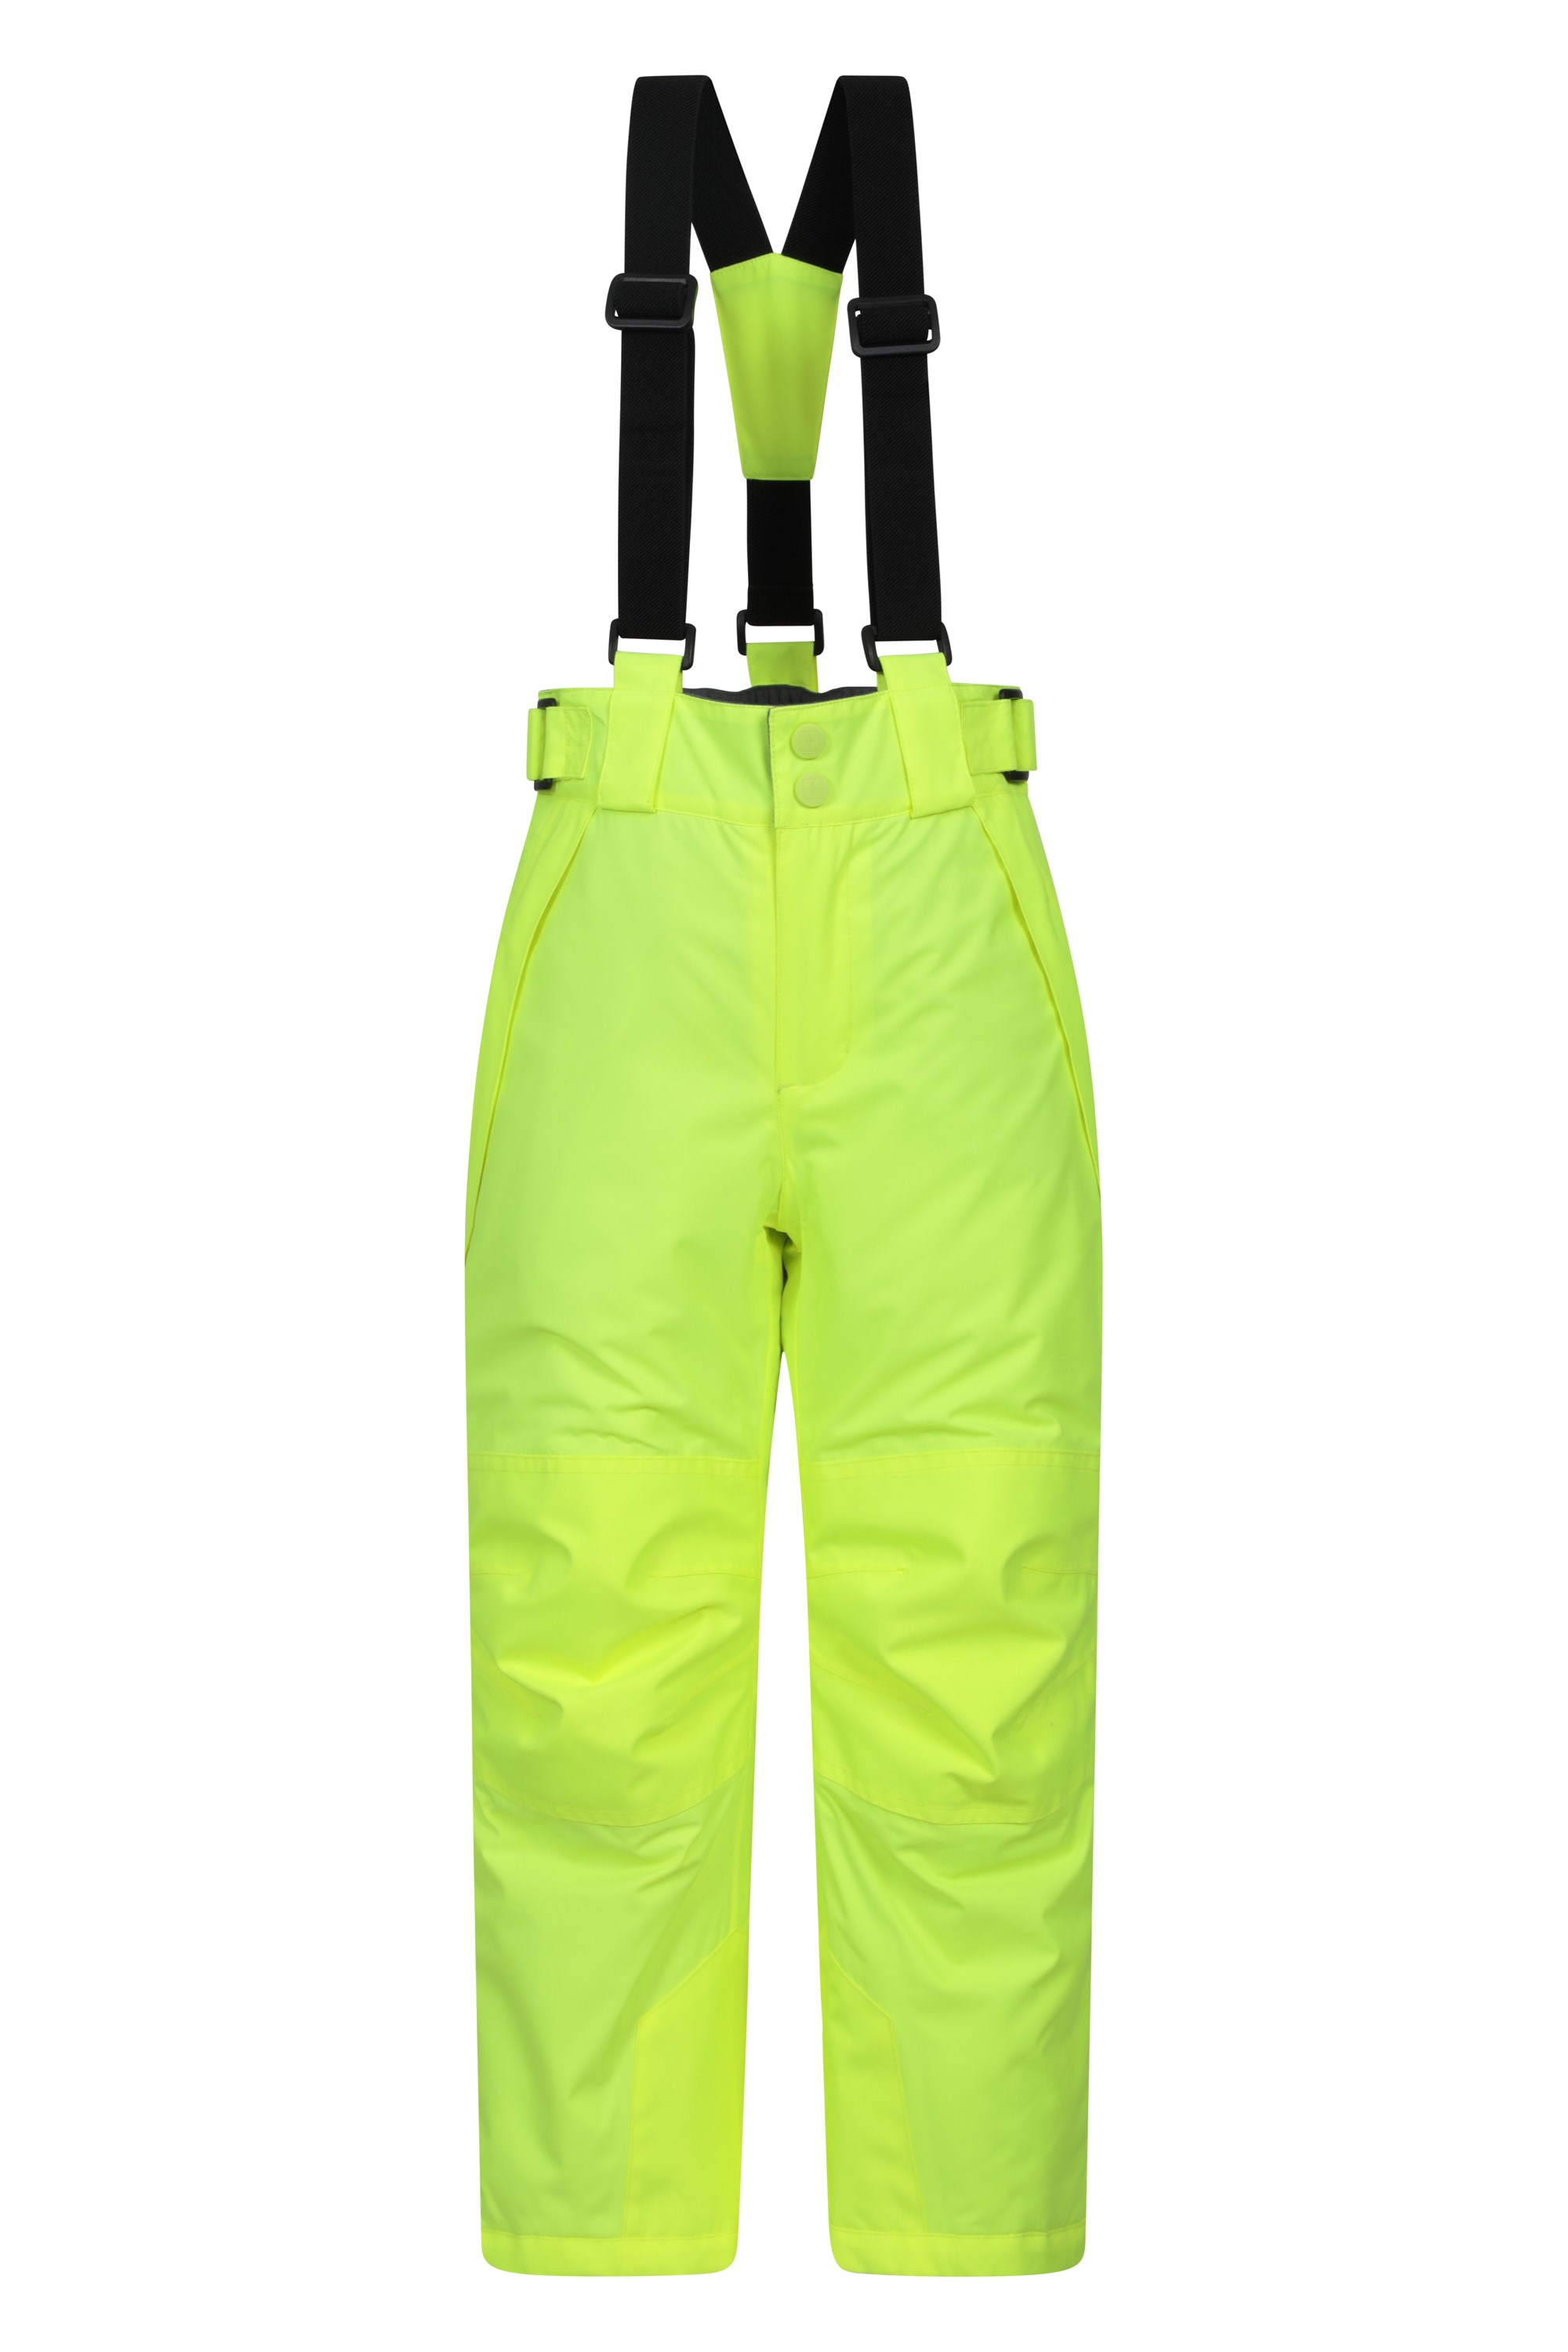 Falcon Extreme Kids Waterproof Ski Pants - Yellow